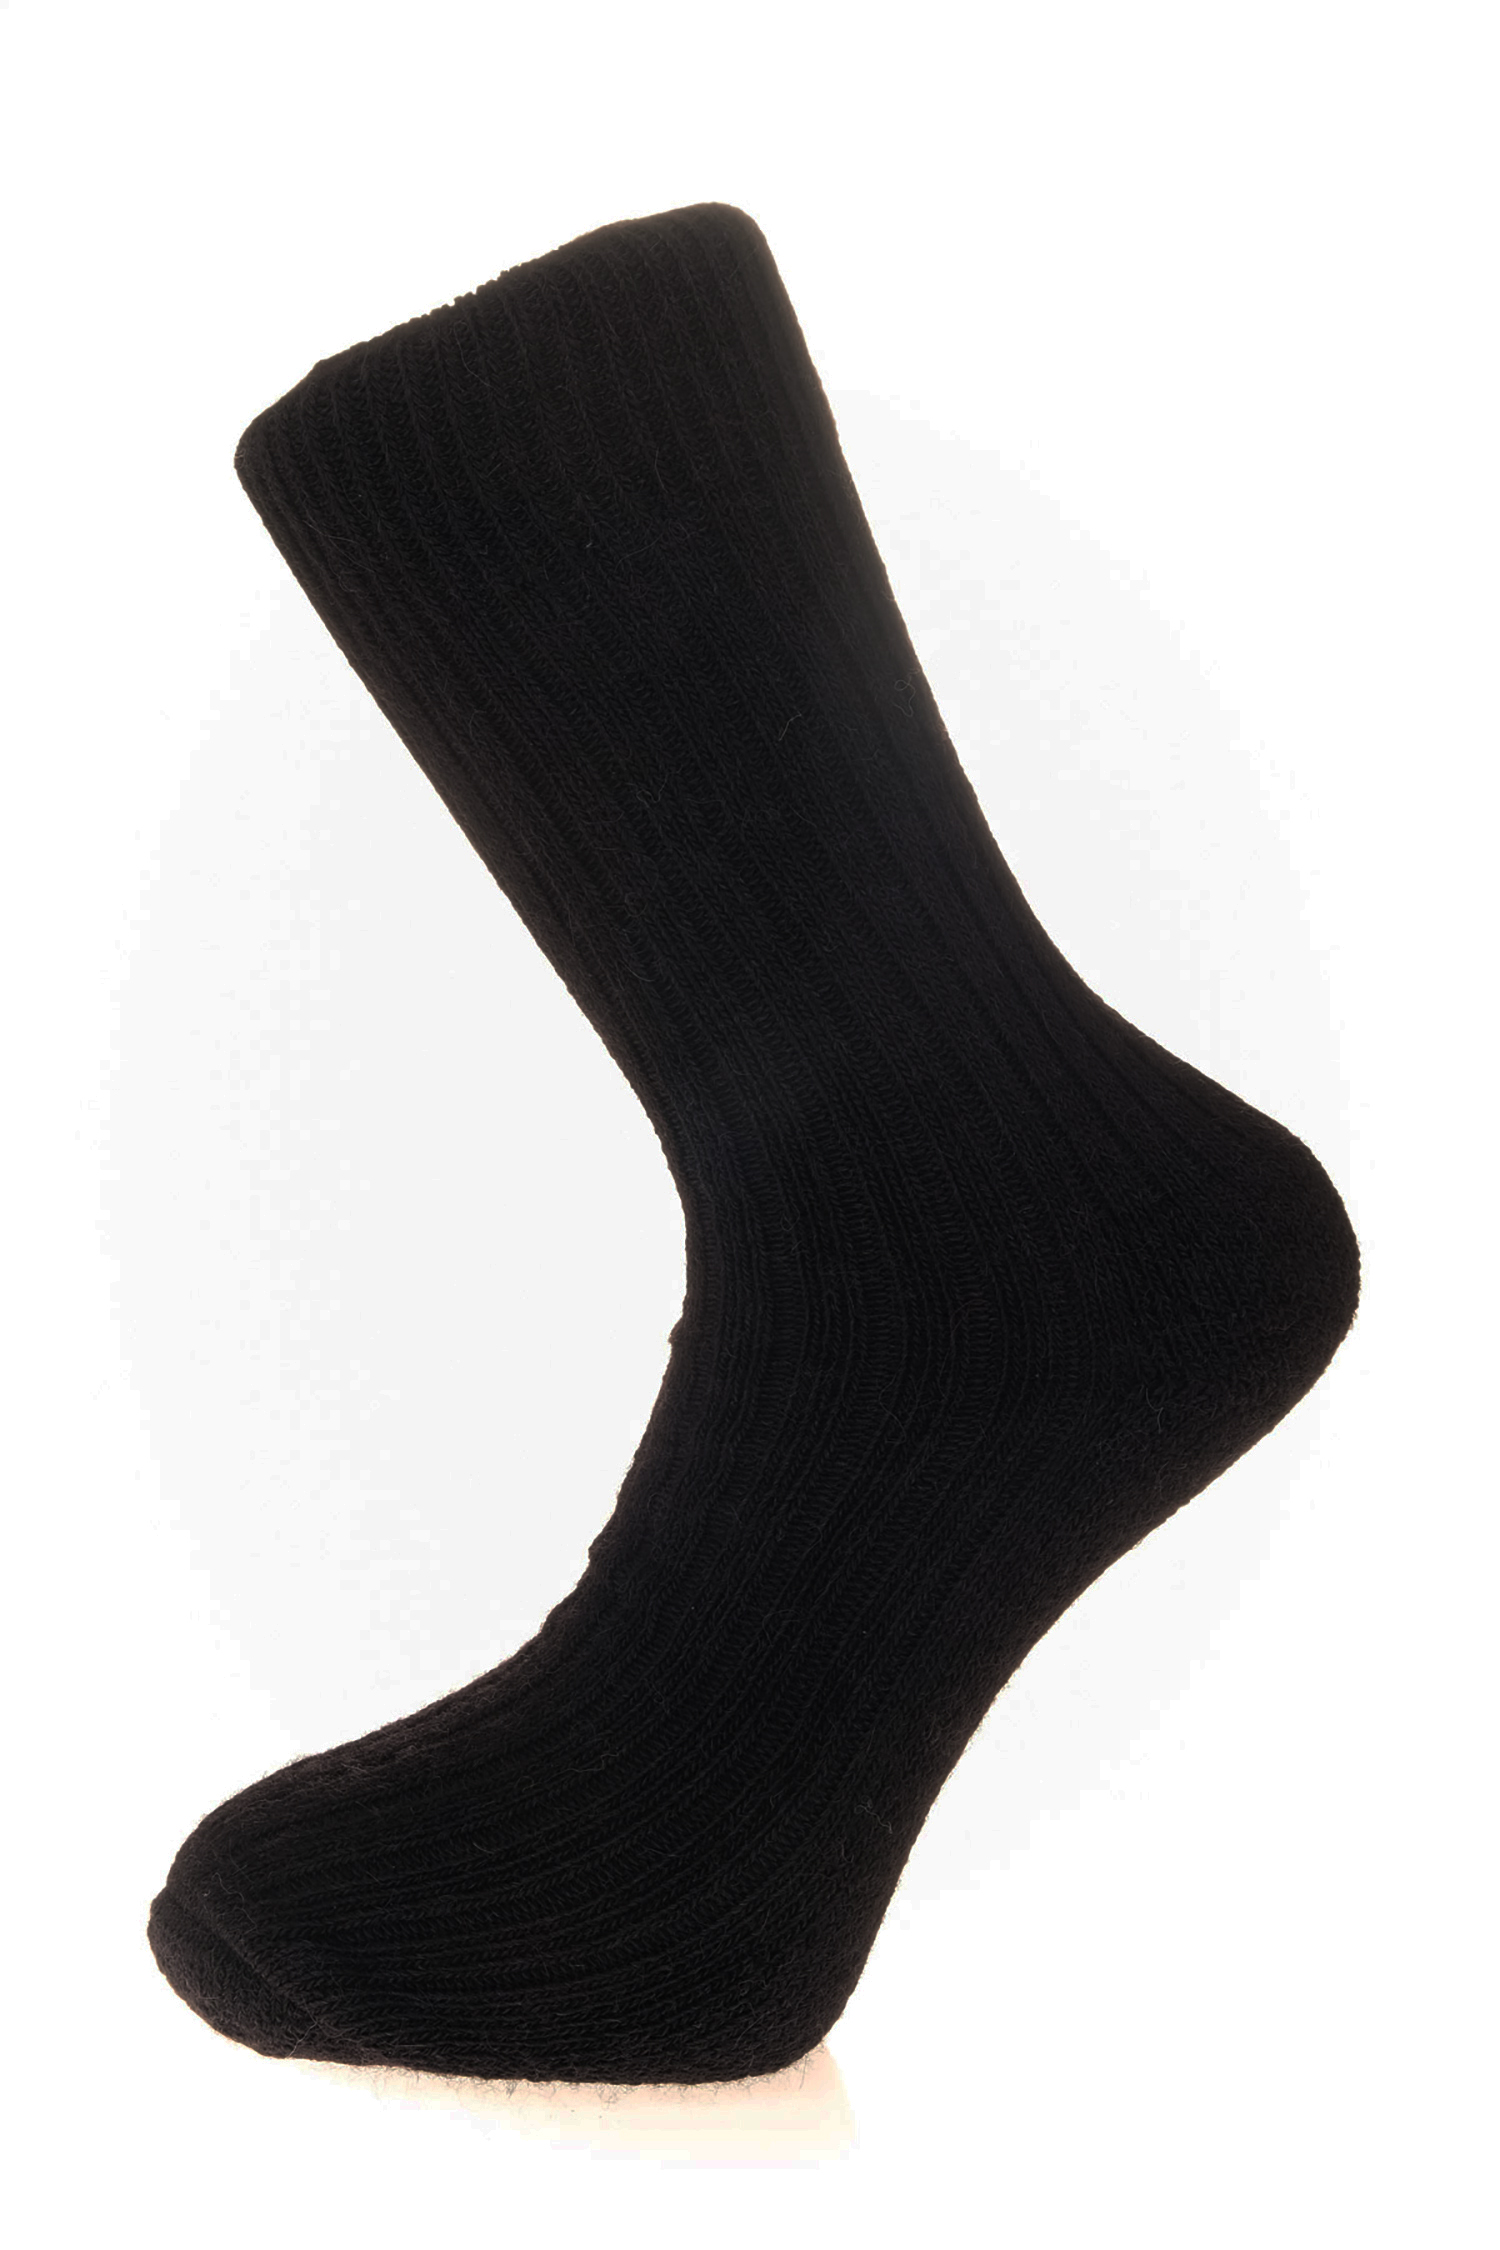 Alpaca walking socks, 75% Alpaca wool. Thick socks with a cushioned sole